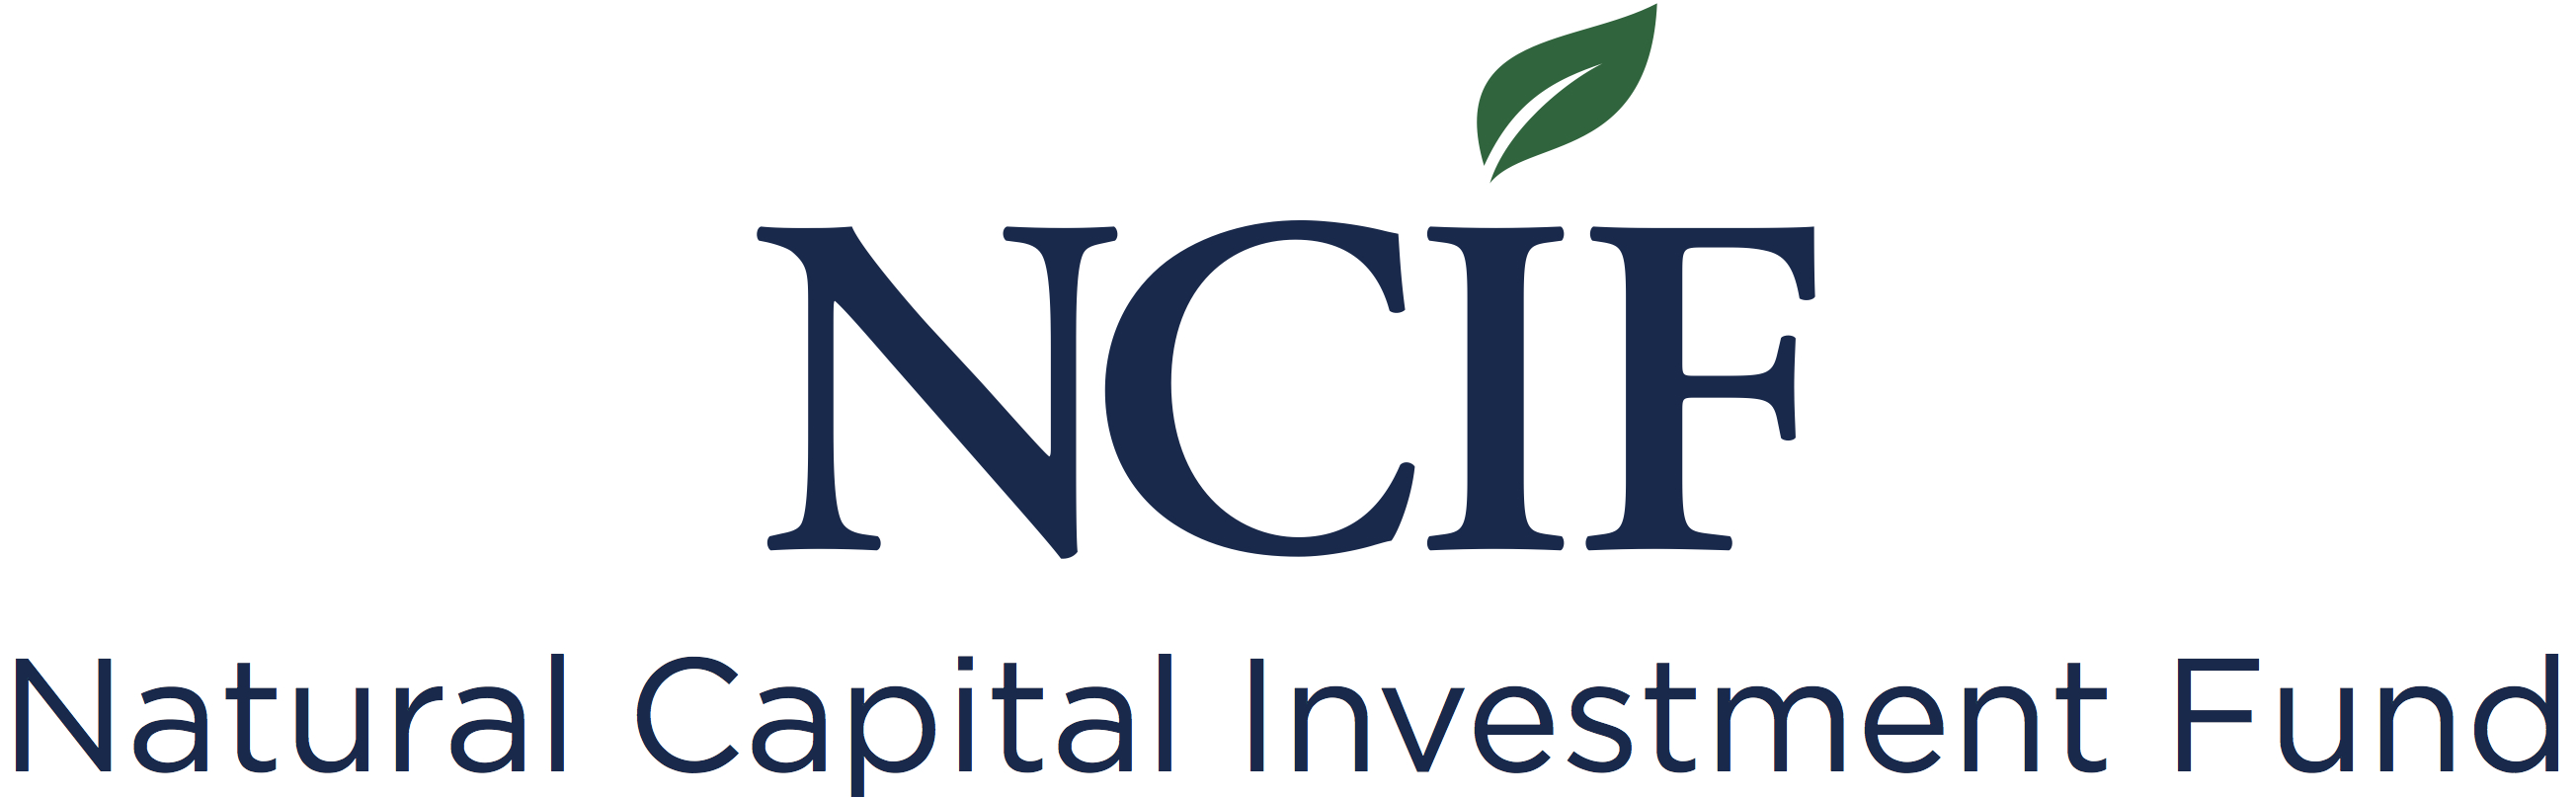 NCIF-logo-with-name-300dpi.jpg